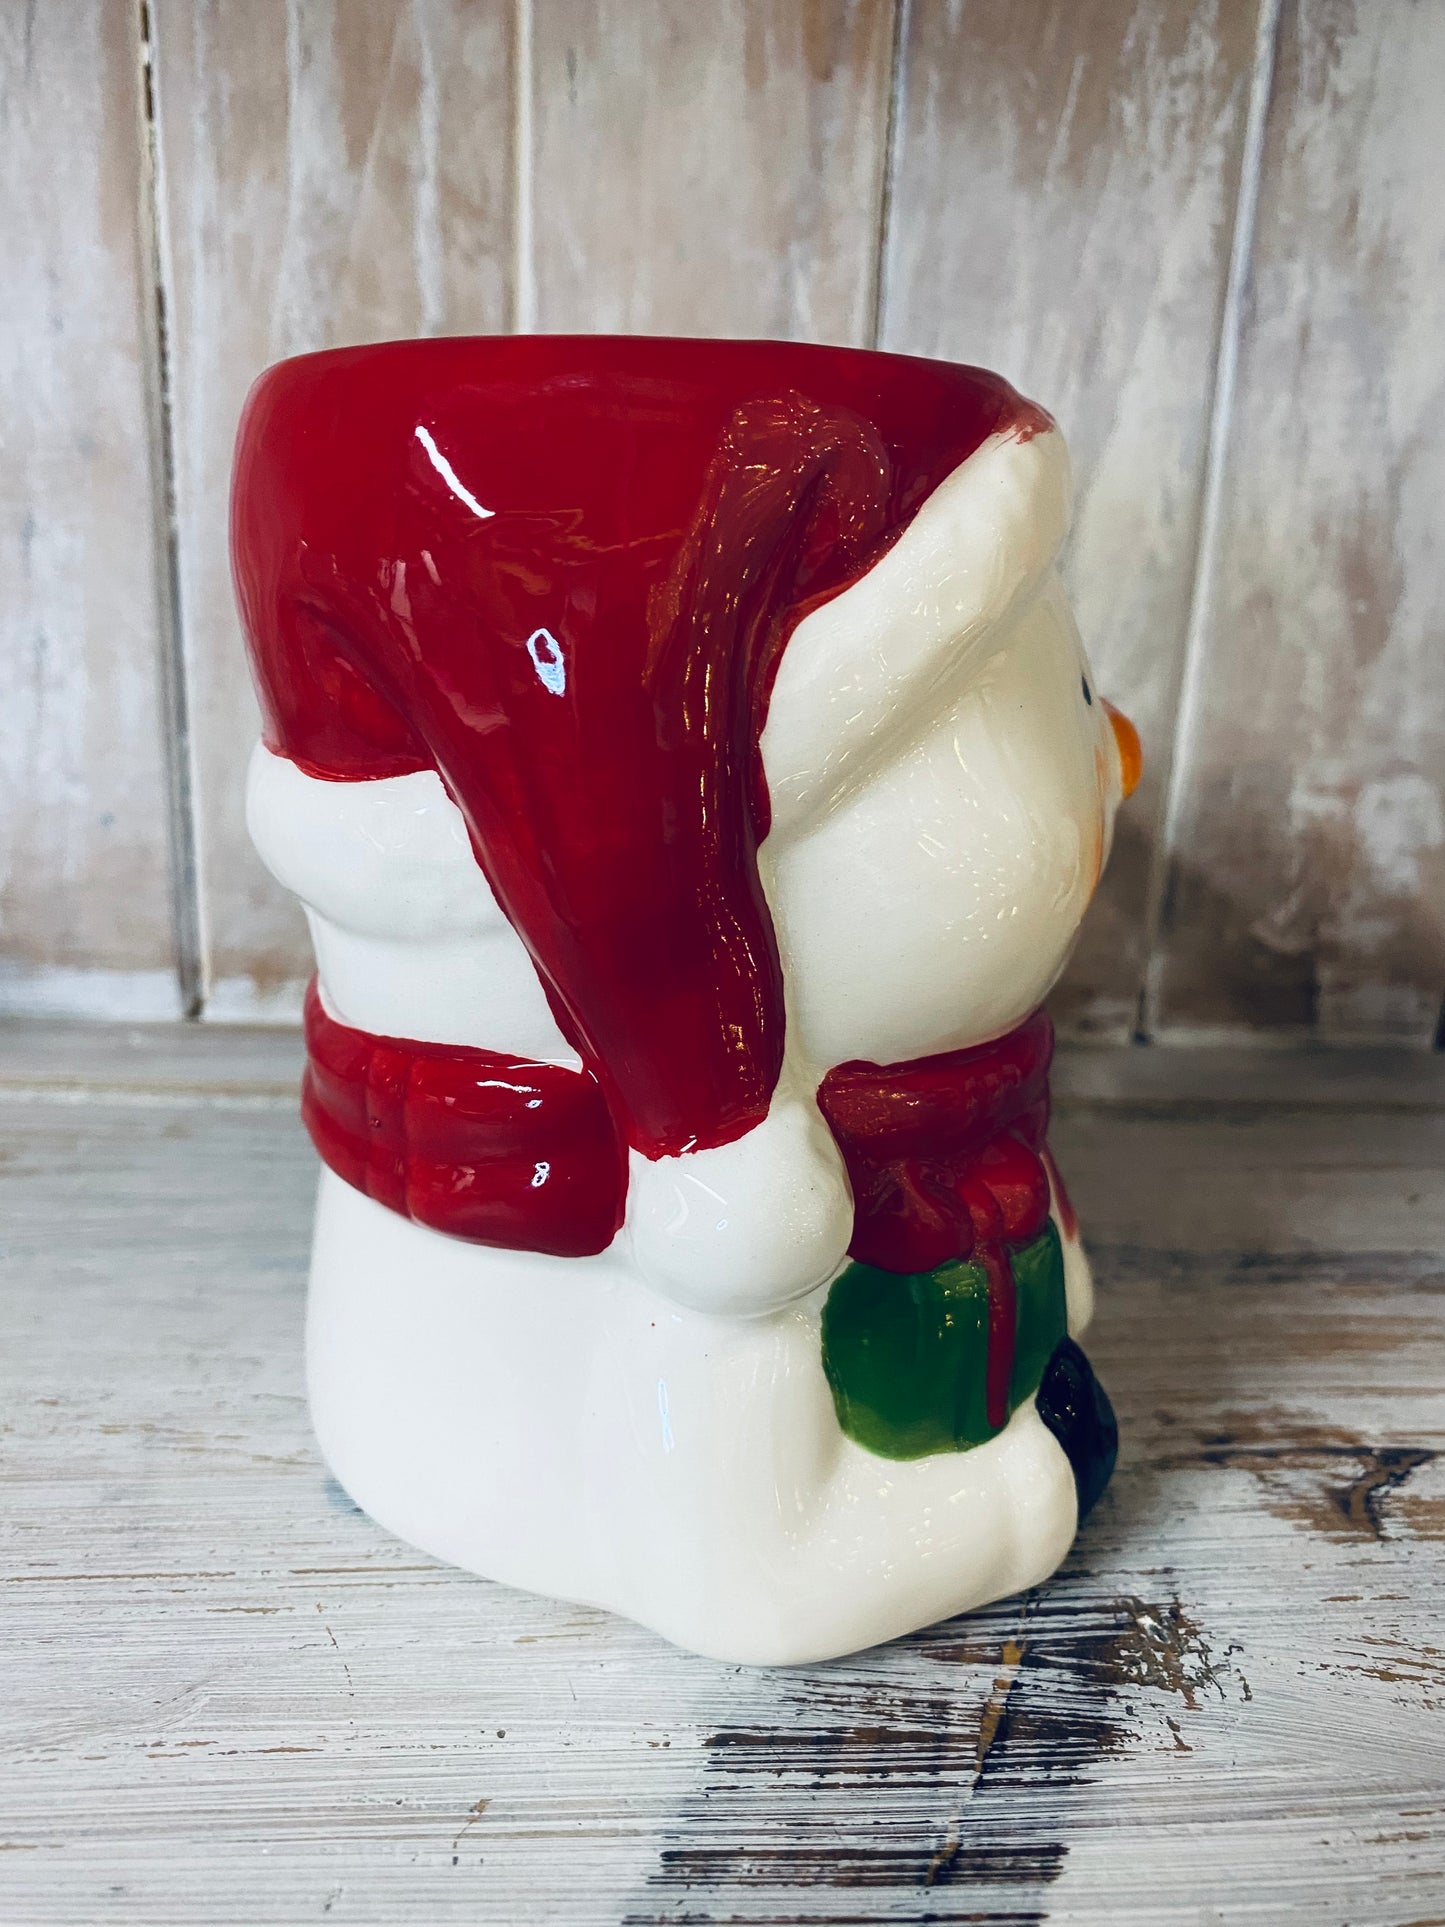 Festive Snowman Mug